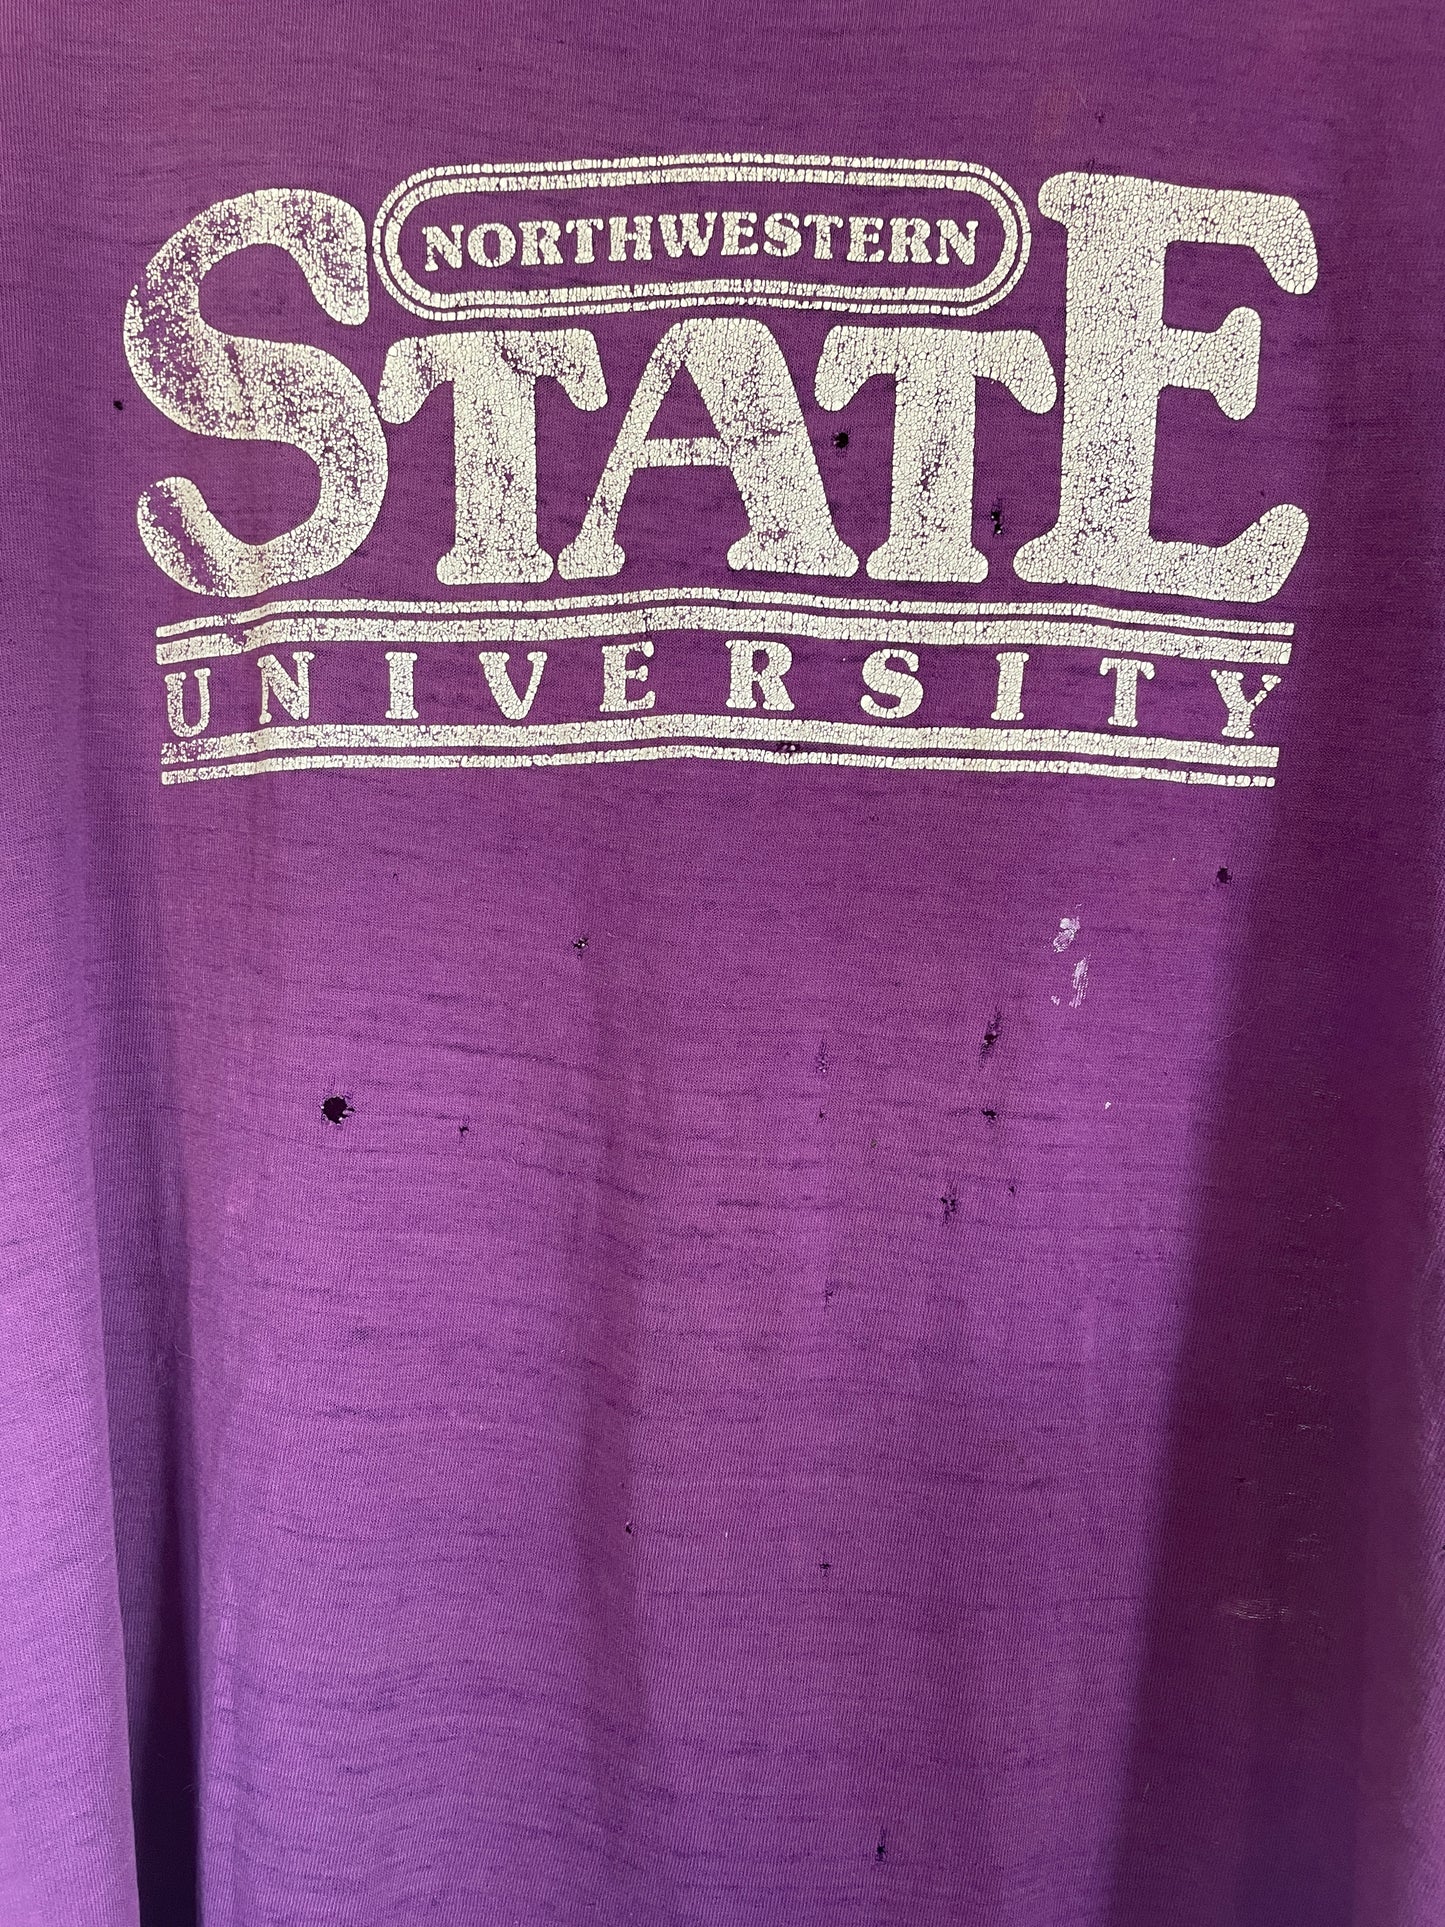 80s Northwestern State University Tee